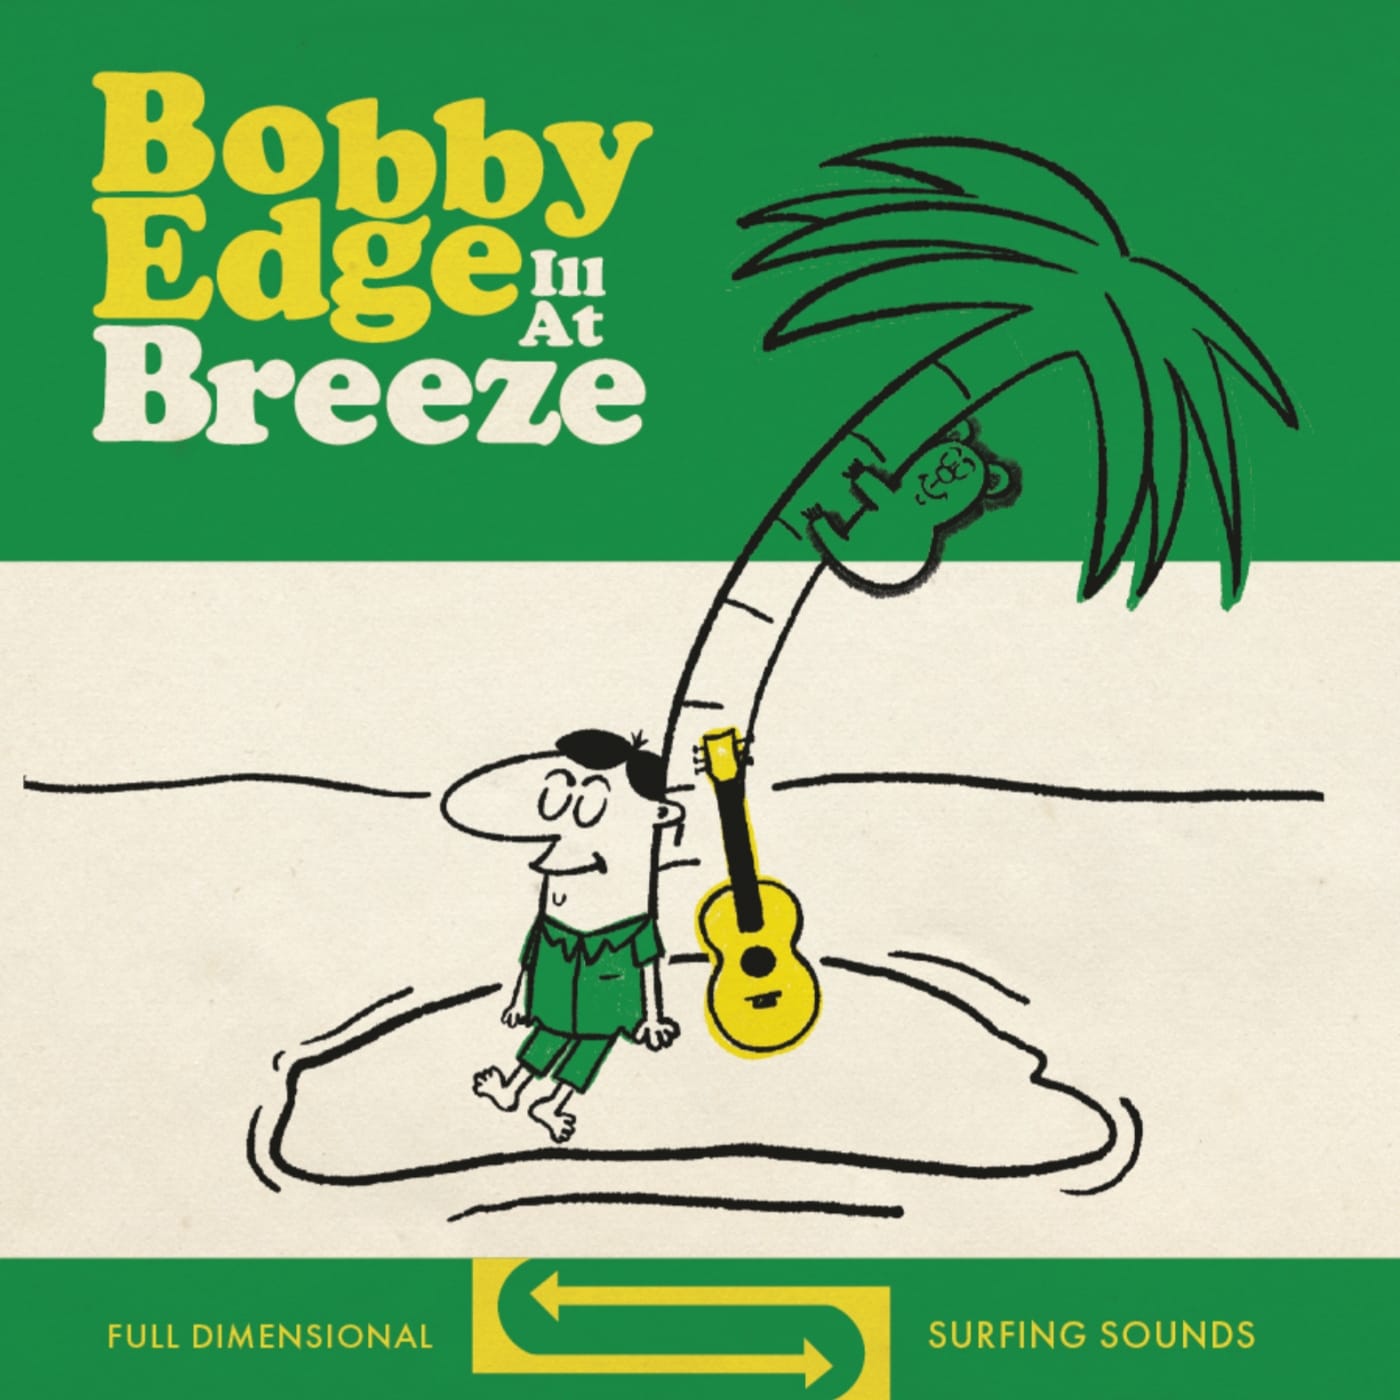 EP: Bobby Edge – III at Breeze